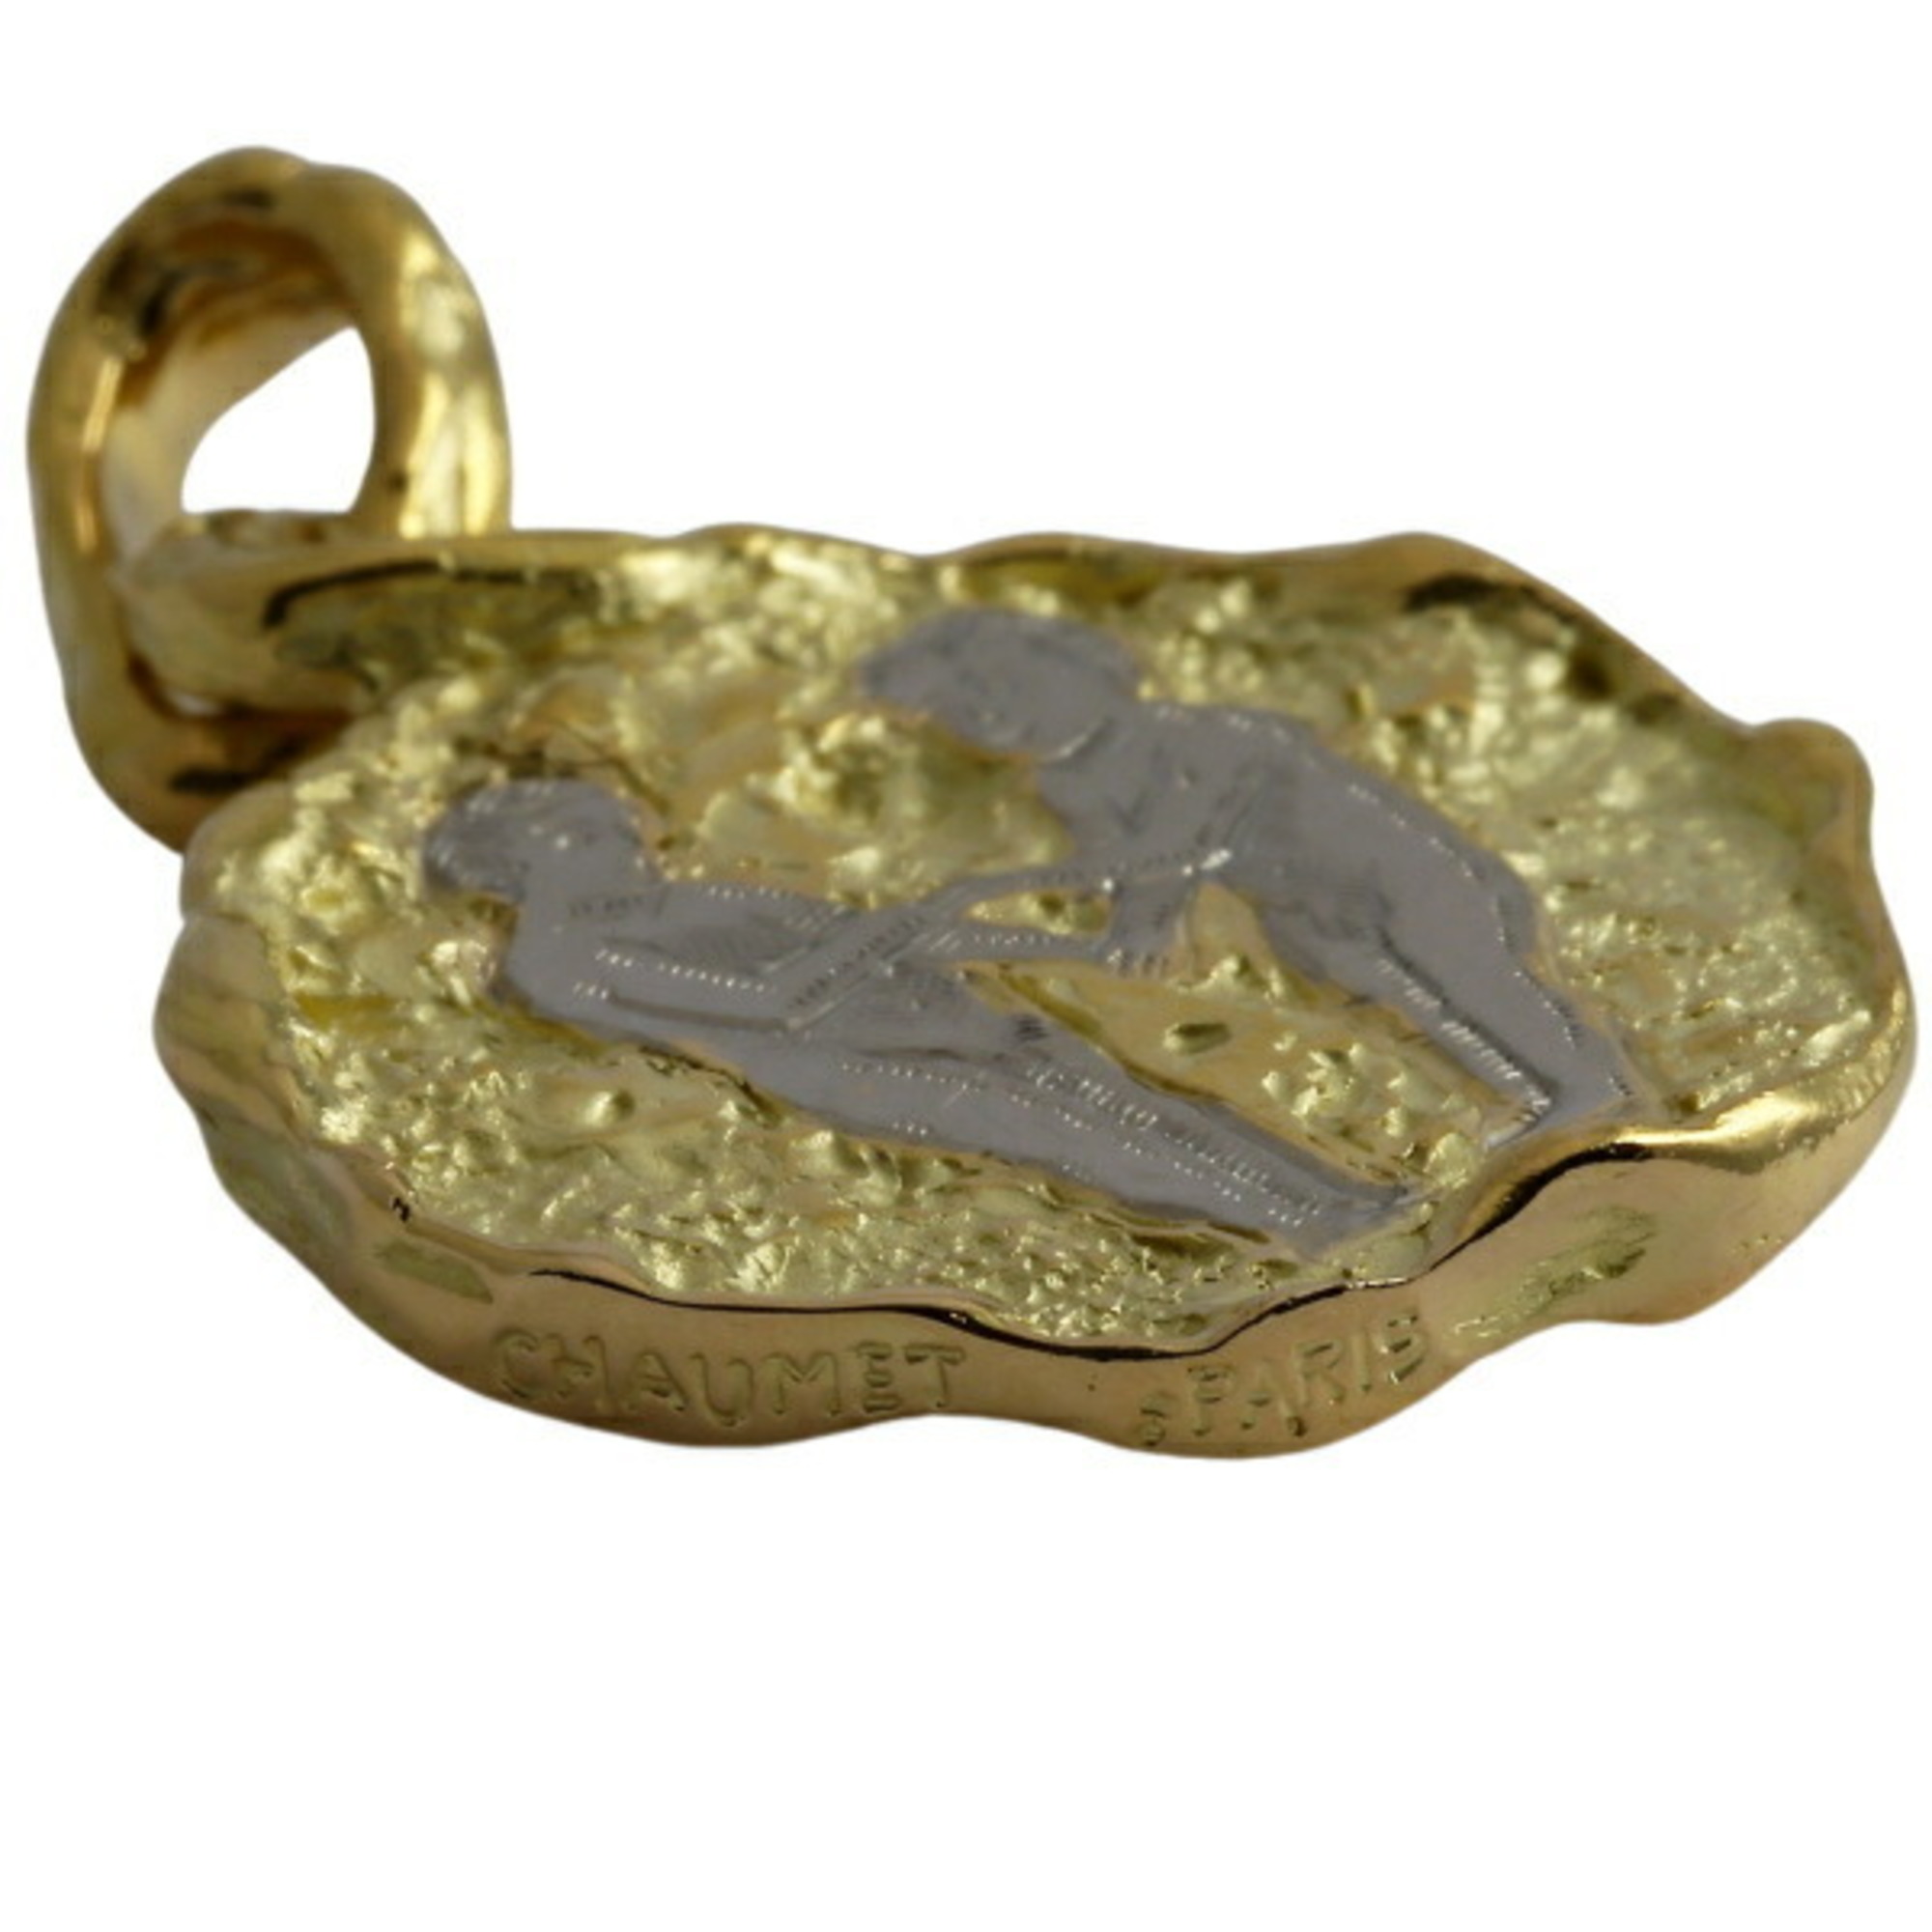 Chaumet Coin Gemini Necklace/Pendant K18YG Yellow Gold K18WG White Pen Head